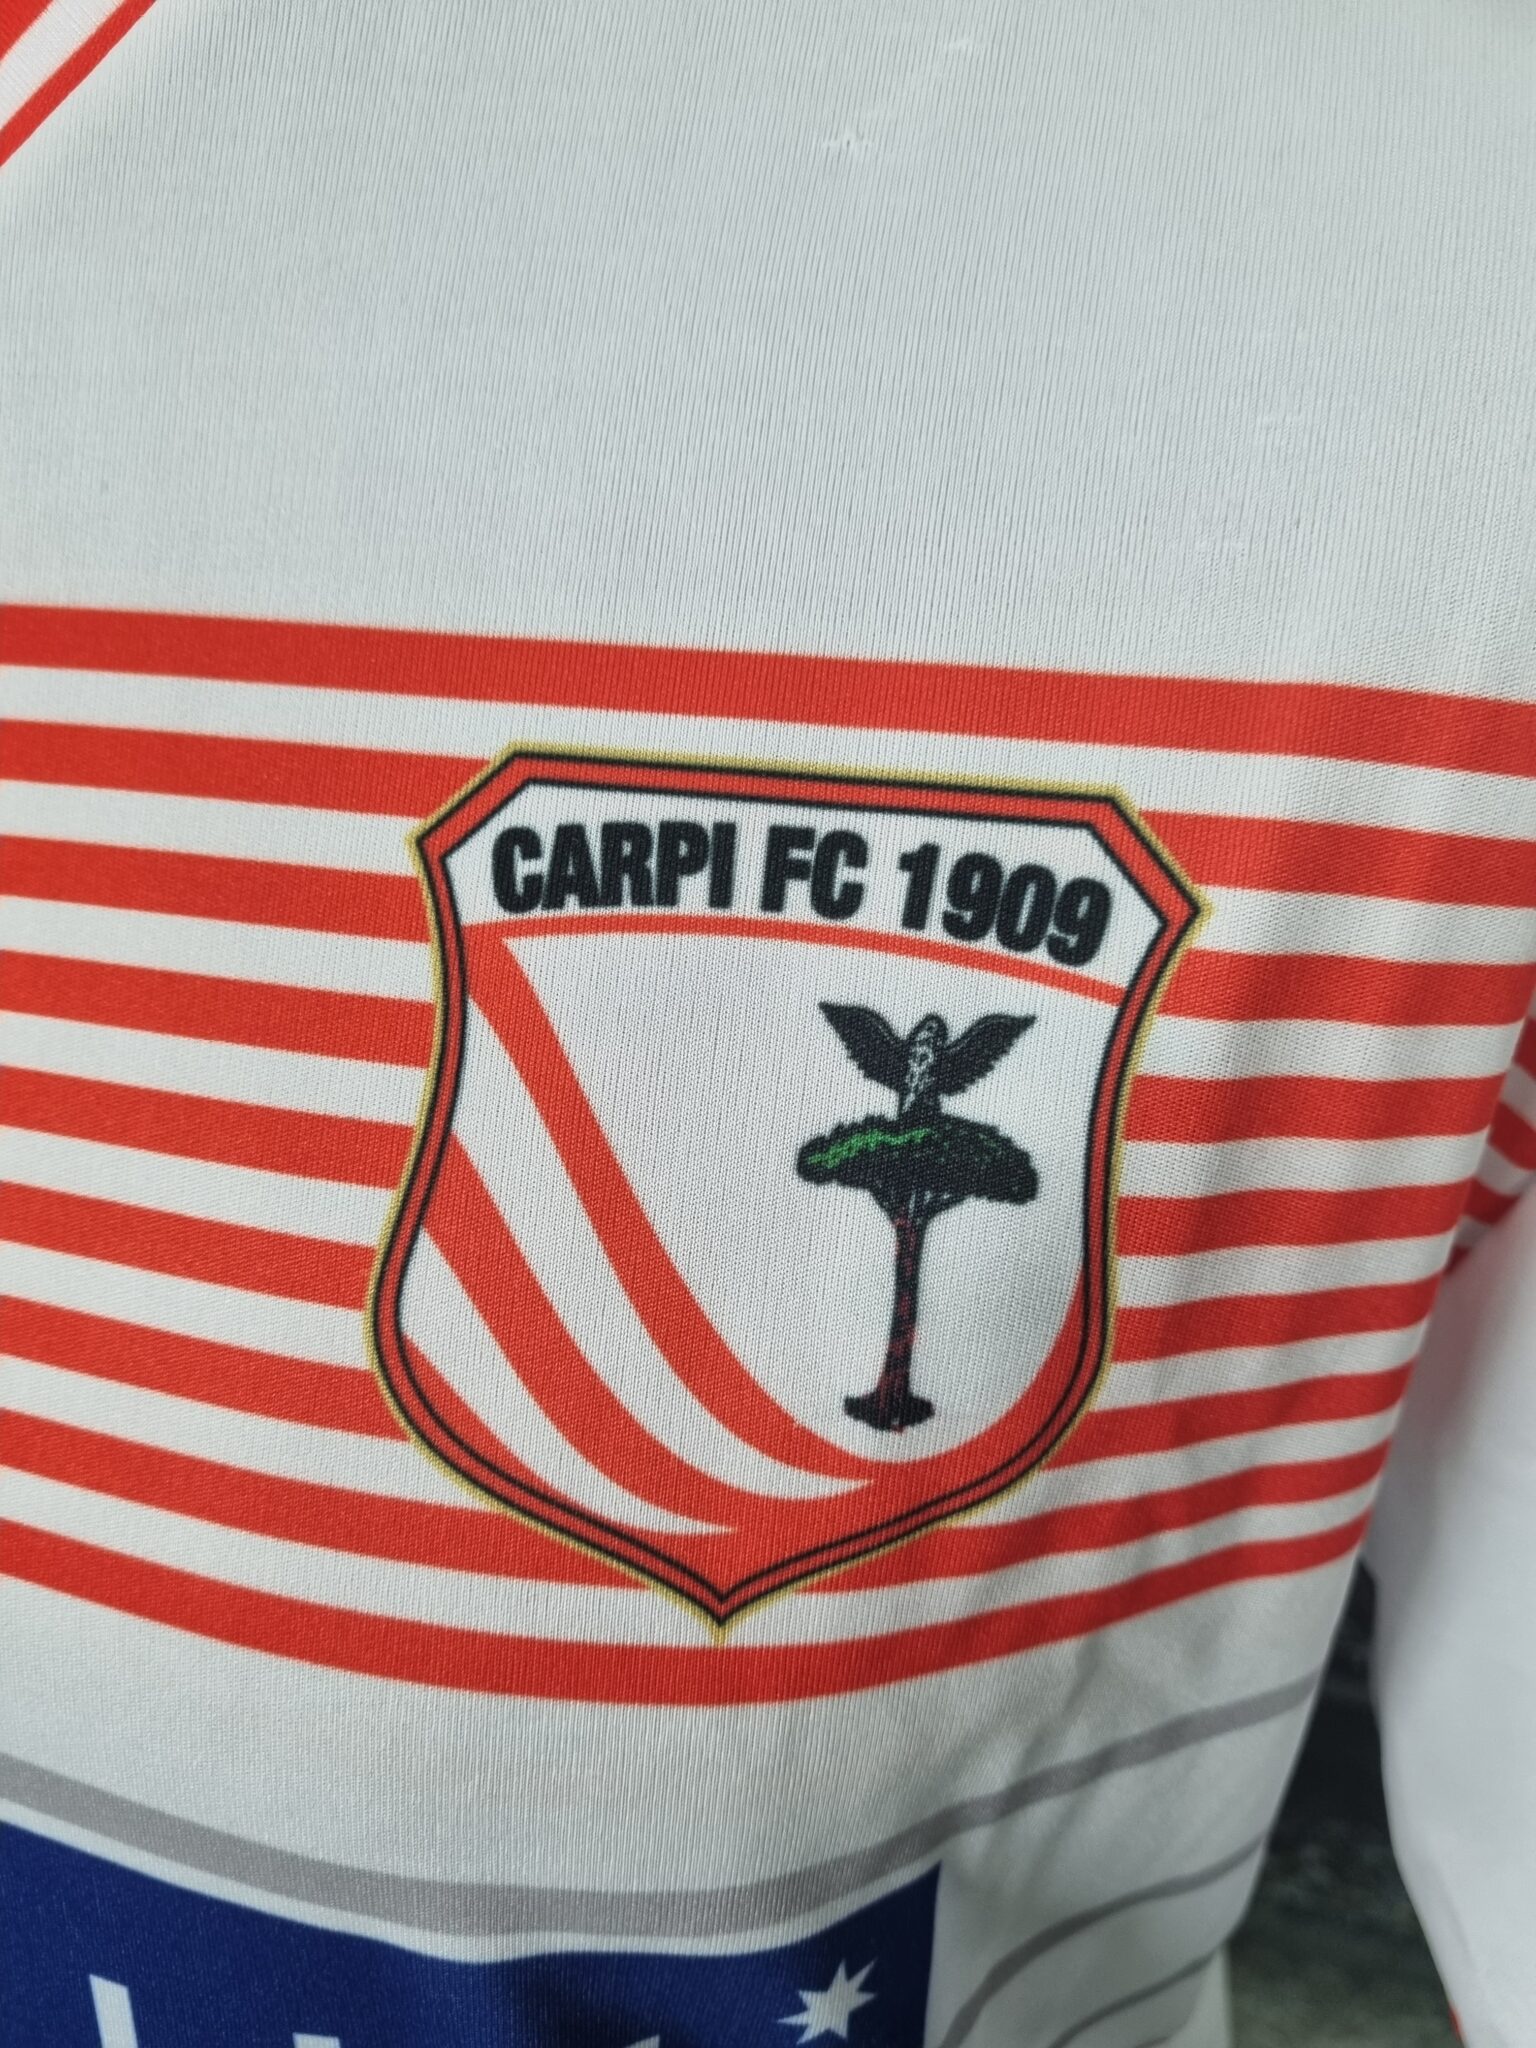 Carpi FC 1909 Calcio 2015/2016 Italy Football Maglia Jersey Soccer Shirt - Sport Club Memories